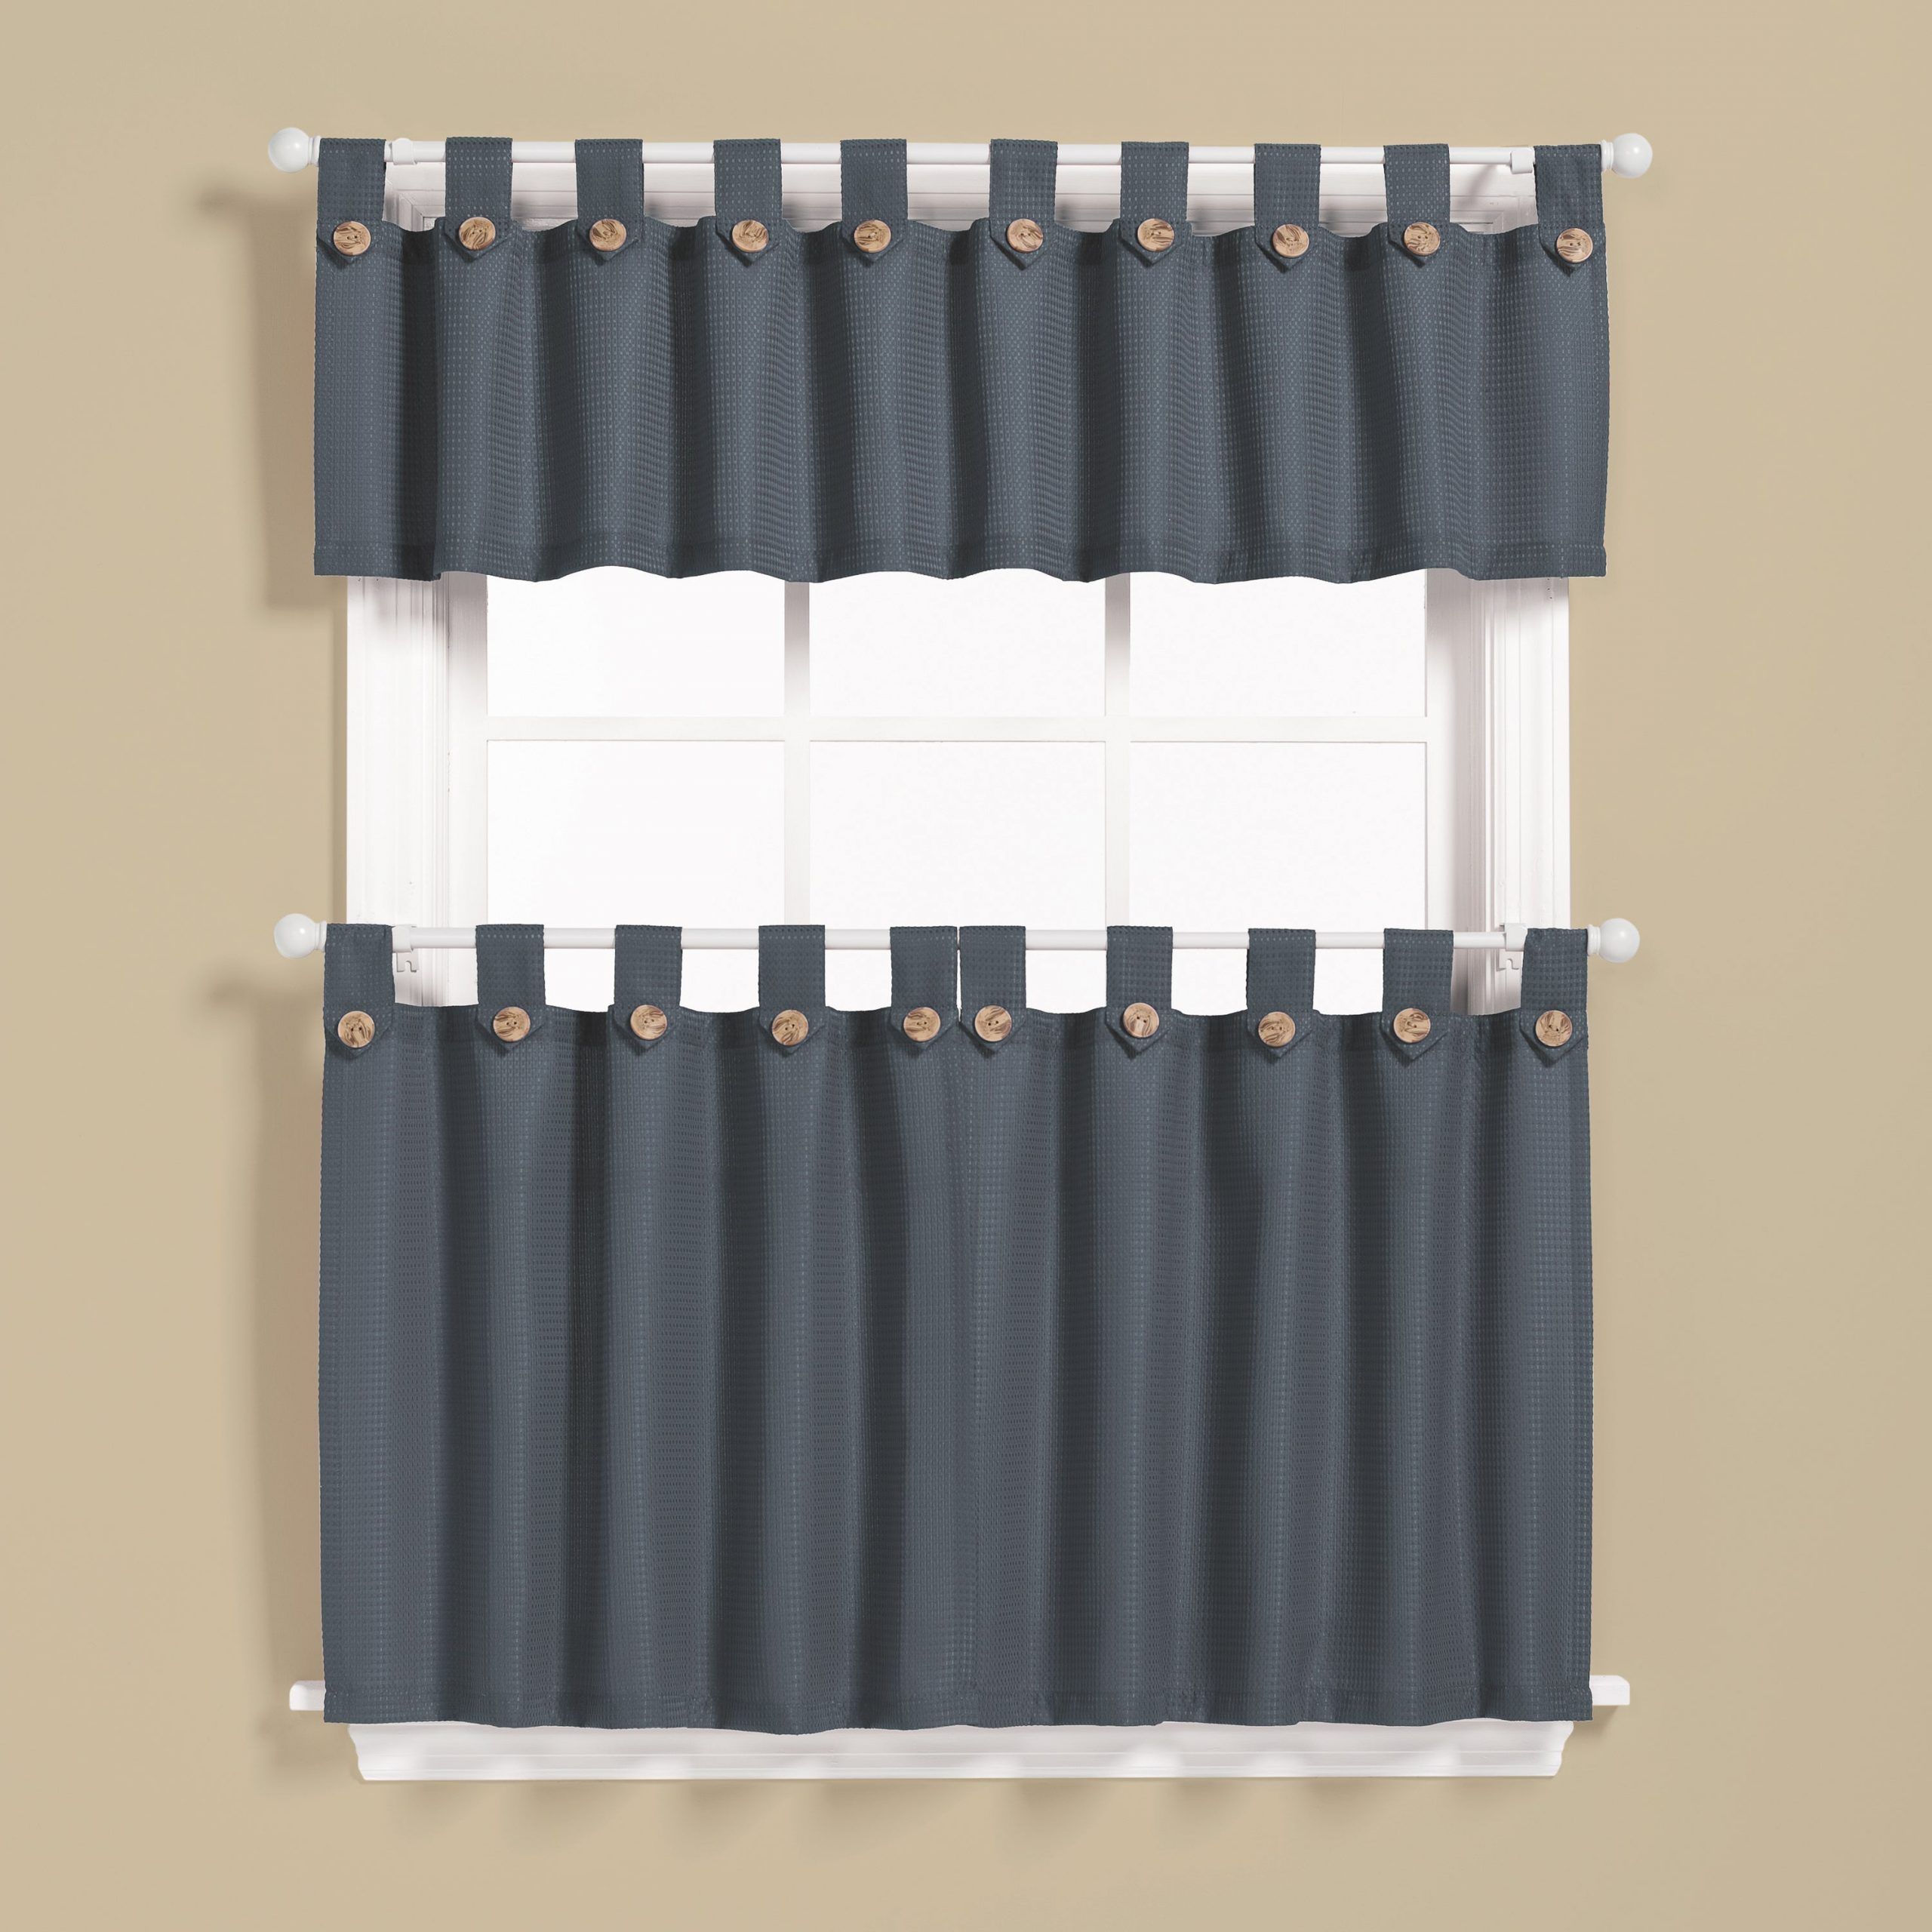 Dakota Window Curtain Tier Pair And Valance Sets With 2020 Saturday Knight Pacifica Window Curtain Tier Pair And Valance Set 36 Inch (View 17 of 20)